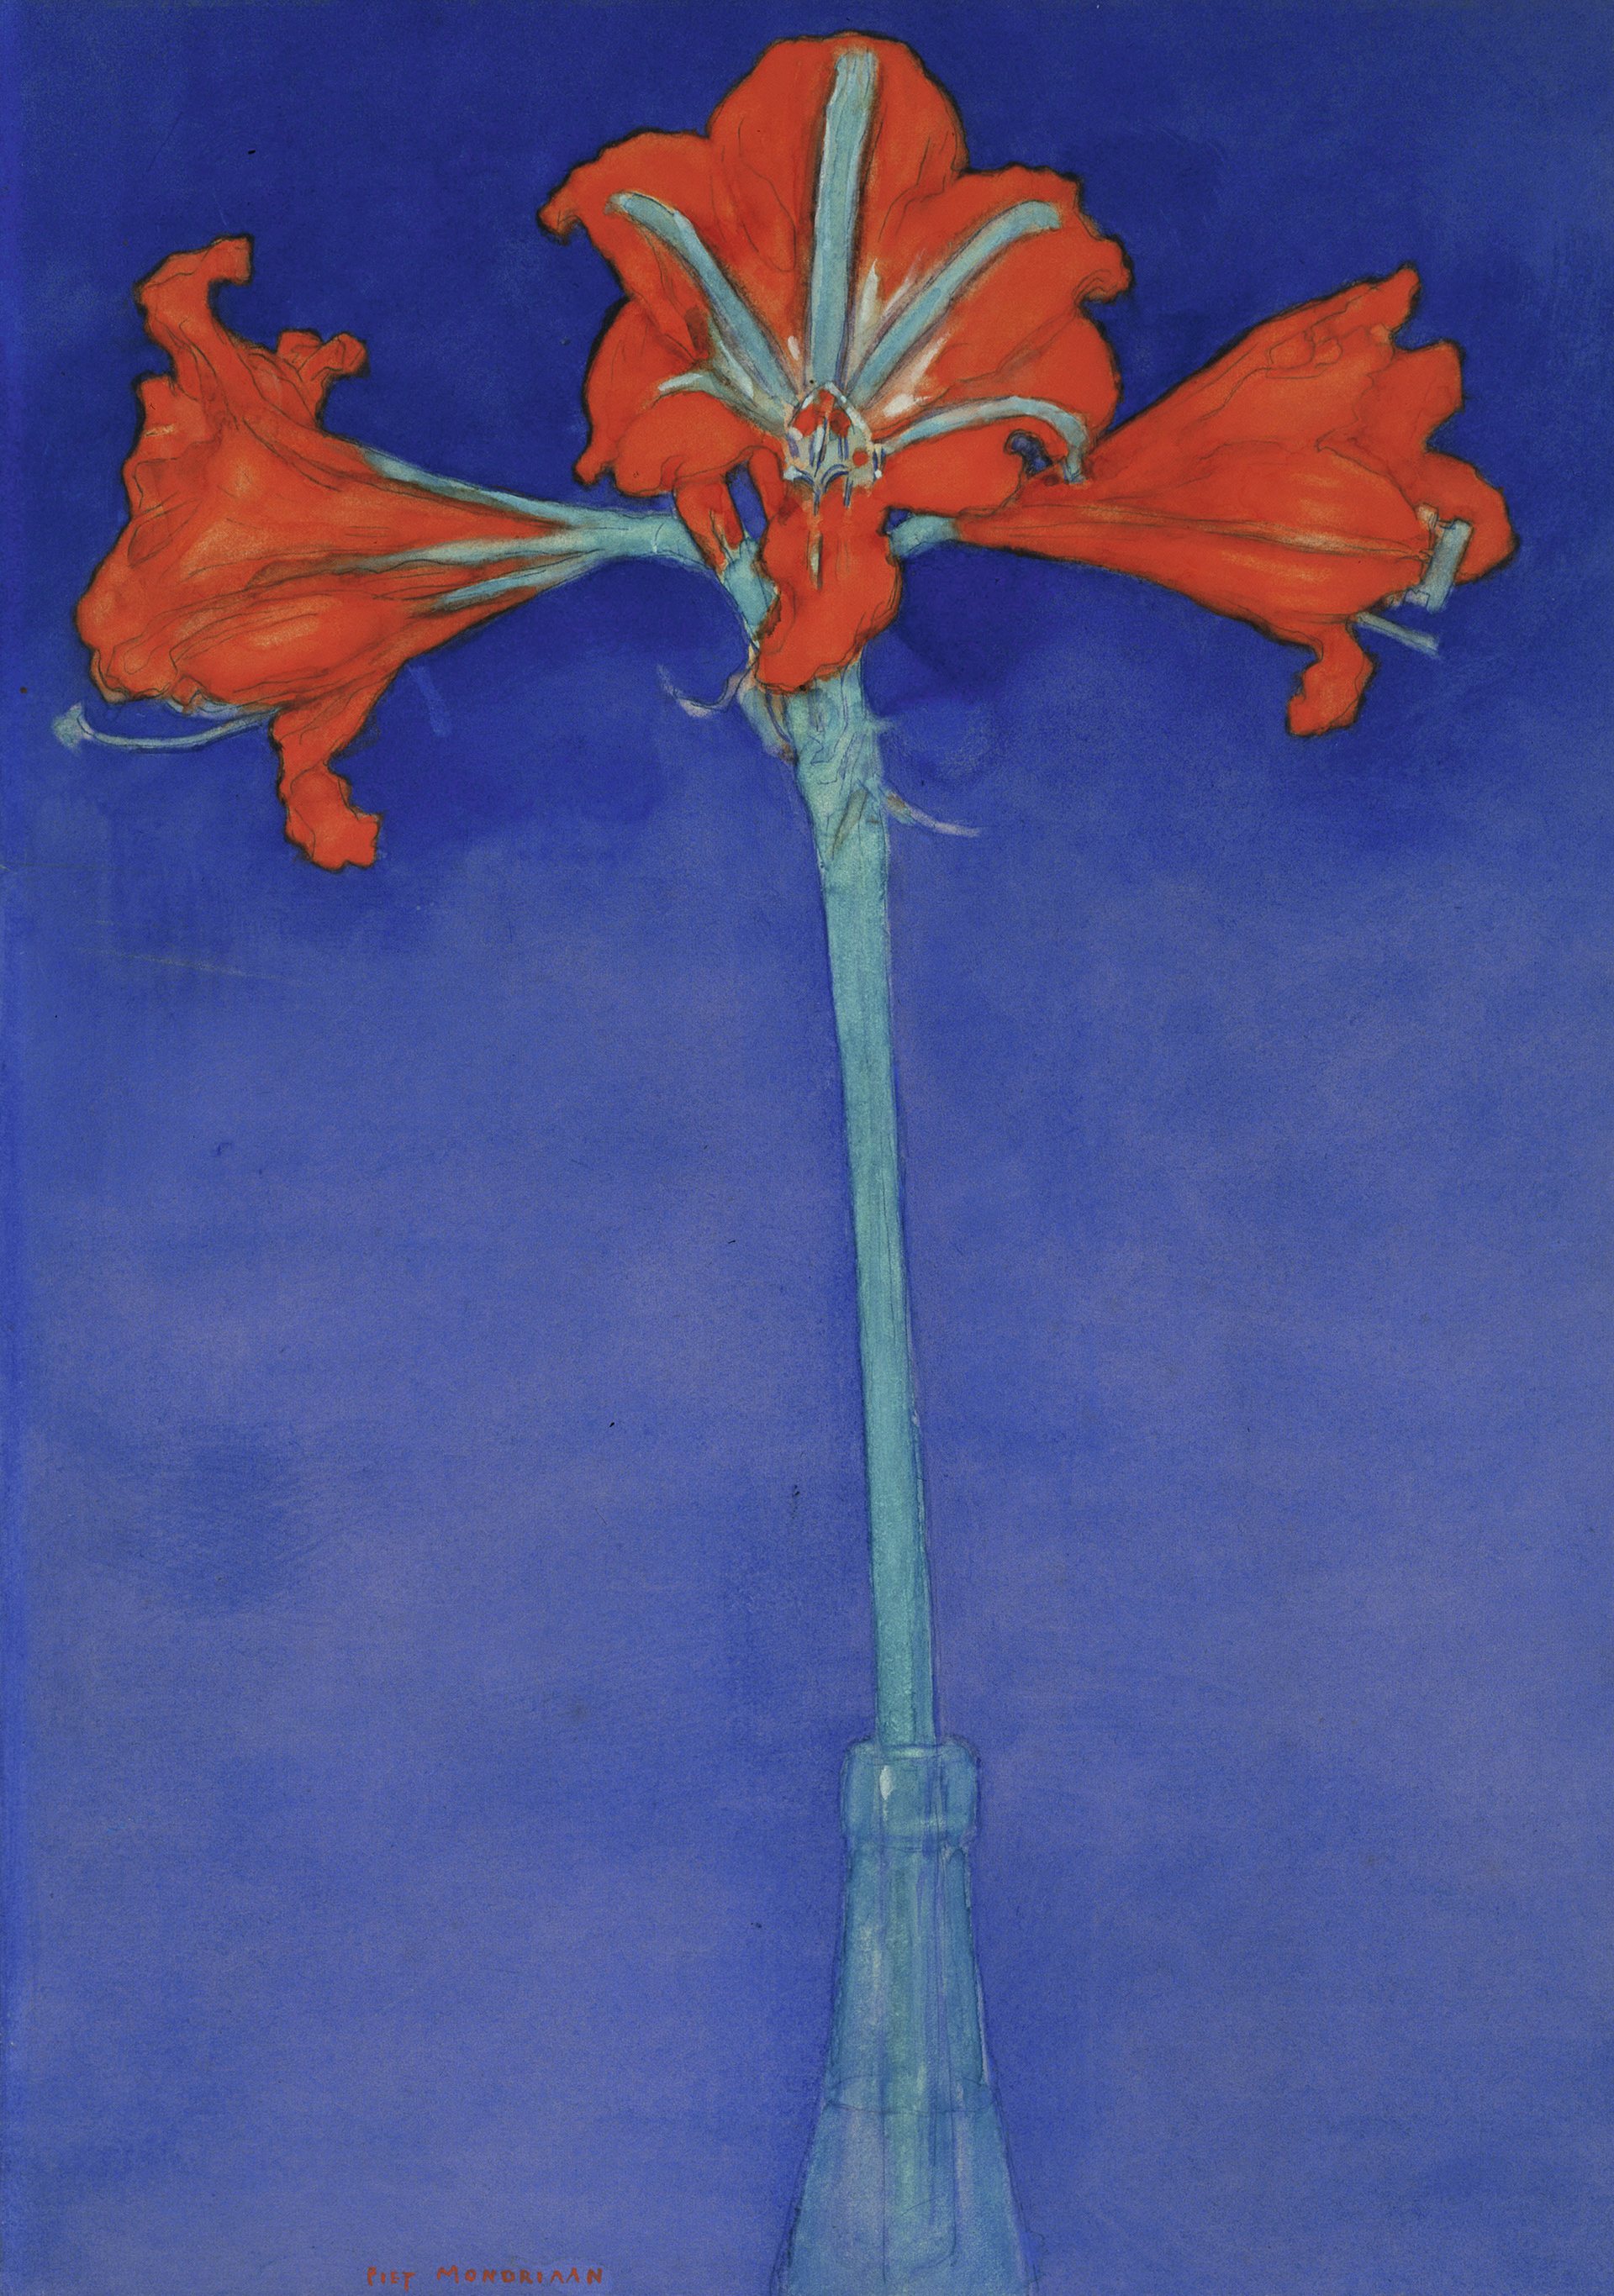 Amaryllis rojas con fondo azul by Piet Mondrian - 1907 Museum of Modern Art